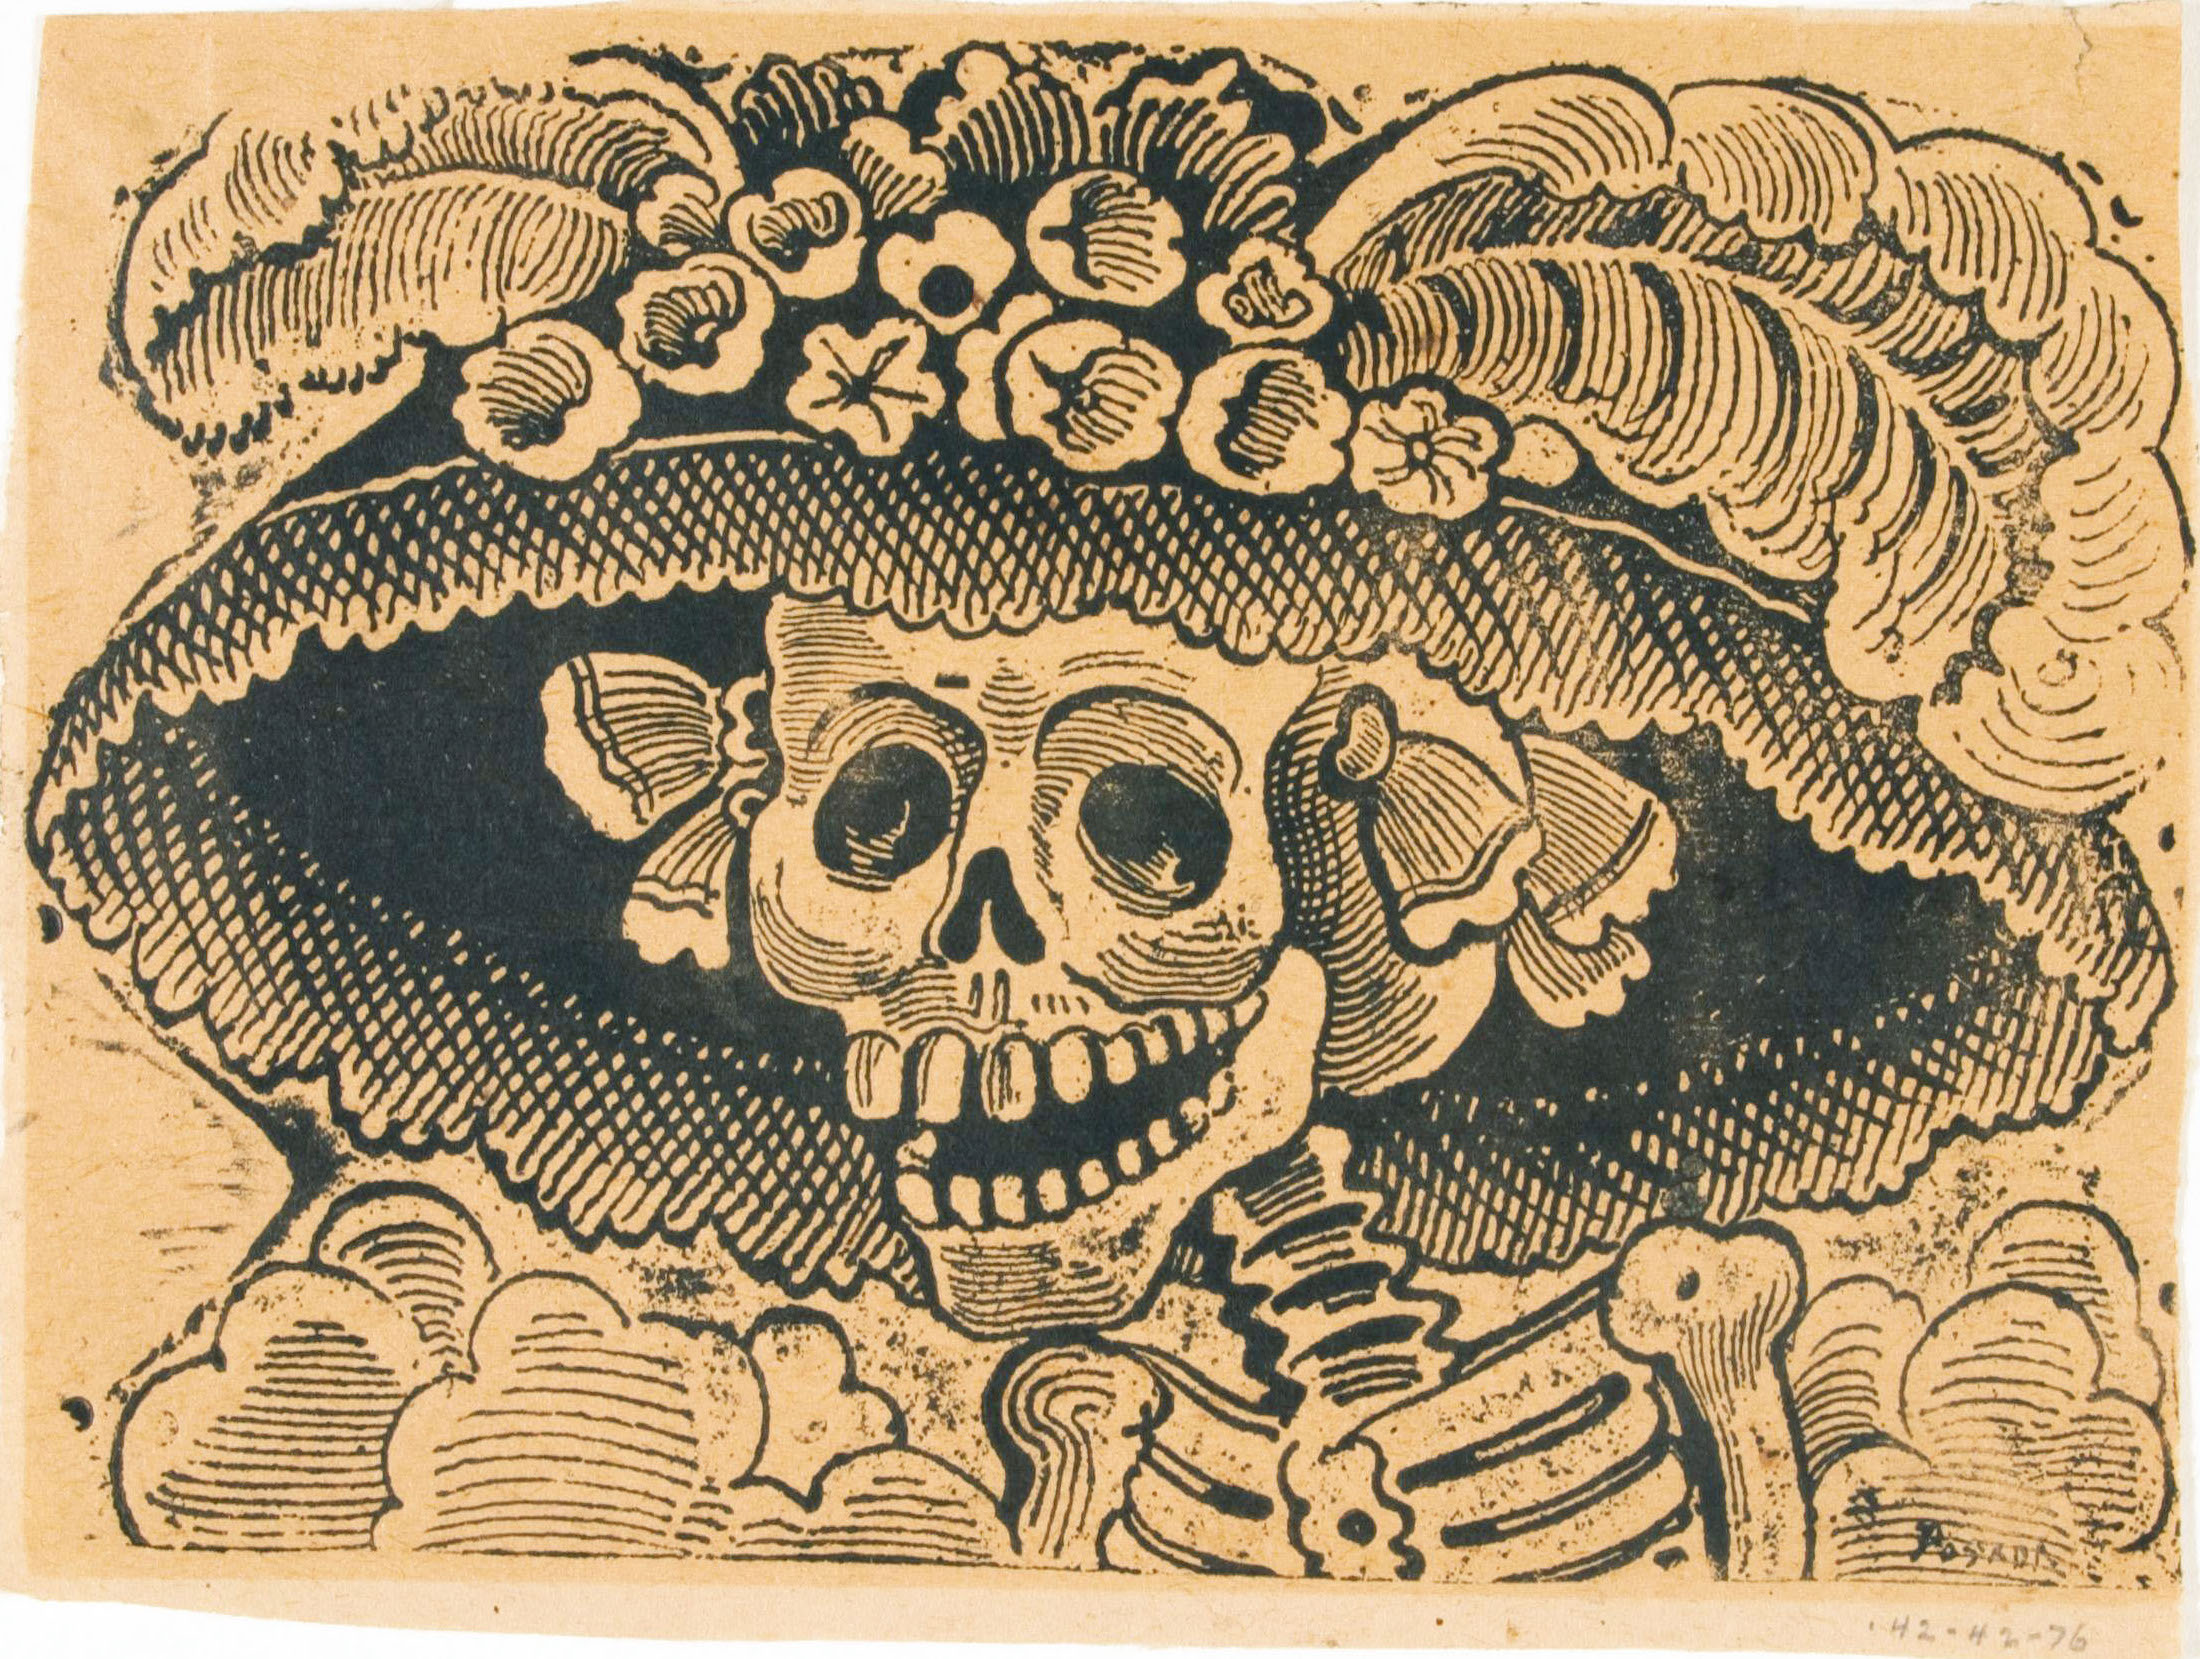 José Guadalupe Posada, La Calavera Catrina, 1913, etching (zinc), 11 x 15.6 cm (Philadelphia Museum of Art)